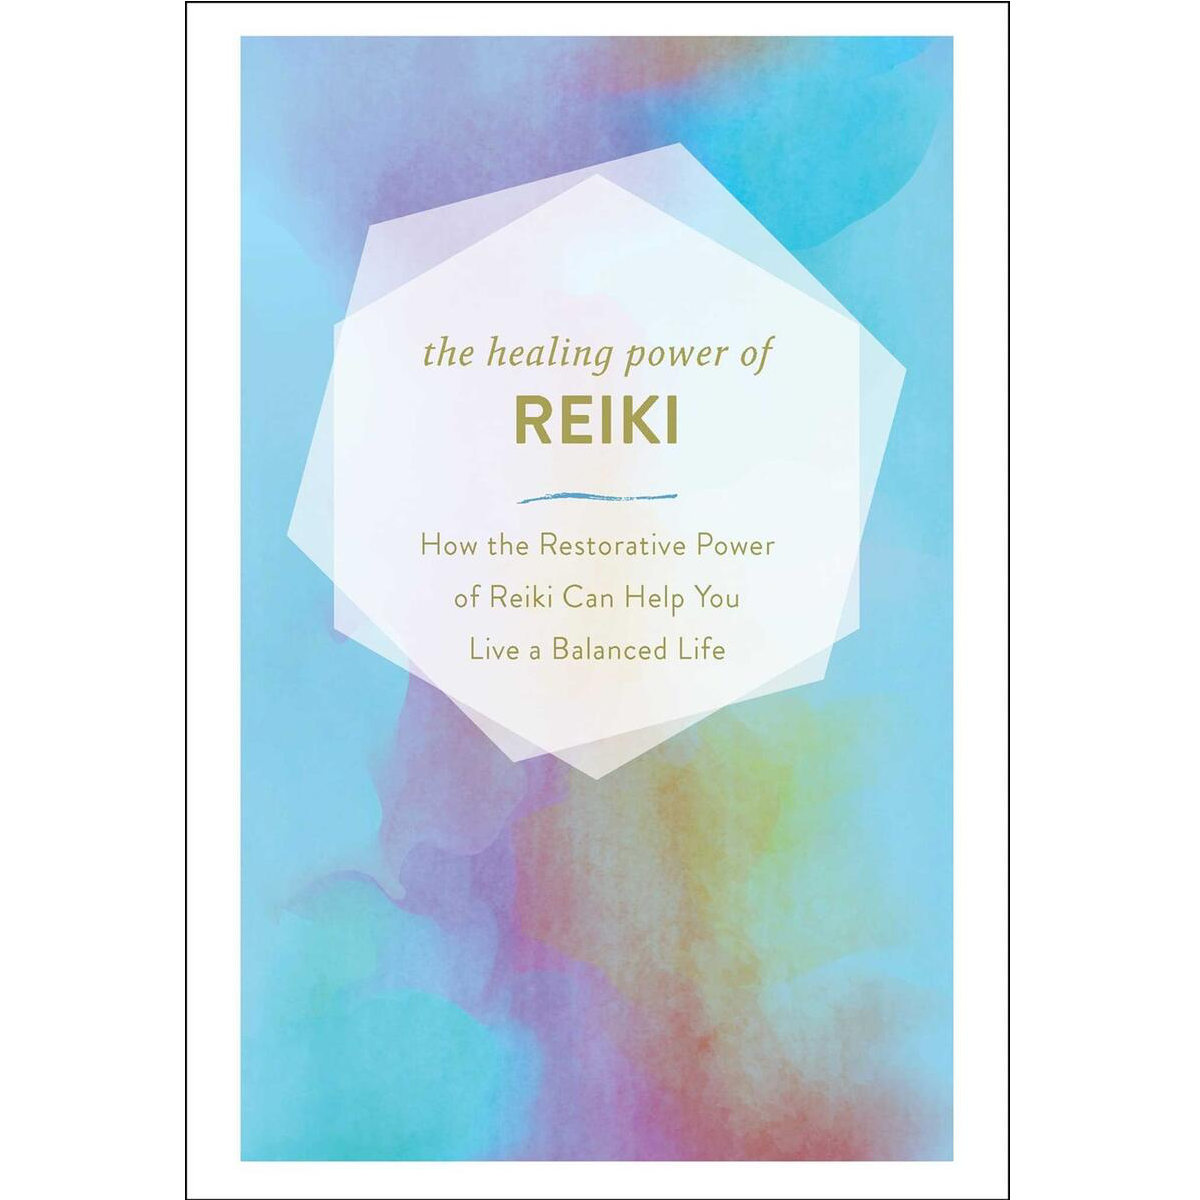 Healing Power of Reiki